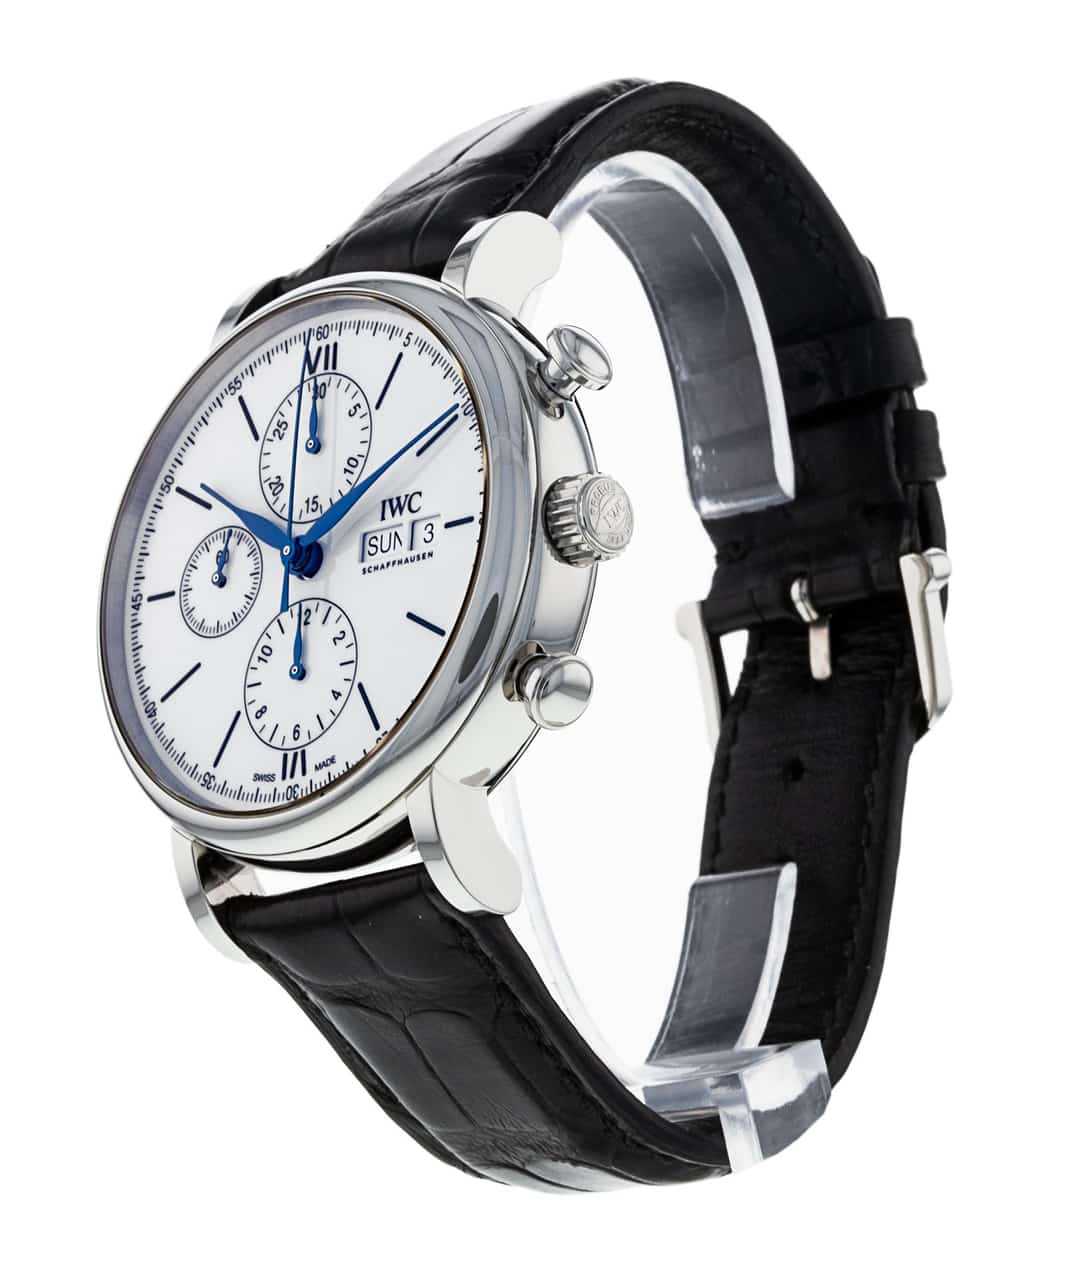 IWC Portofino Chronograph White Dial Black Leather Strap Watch for Men - IW391024